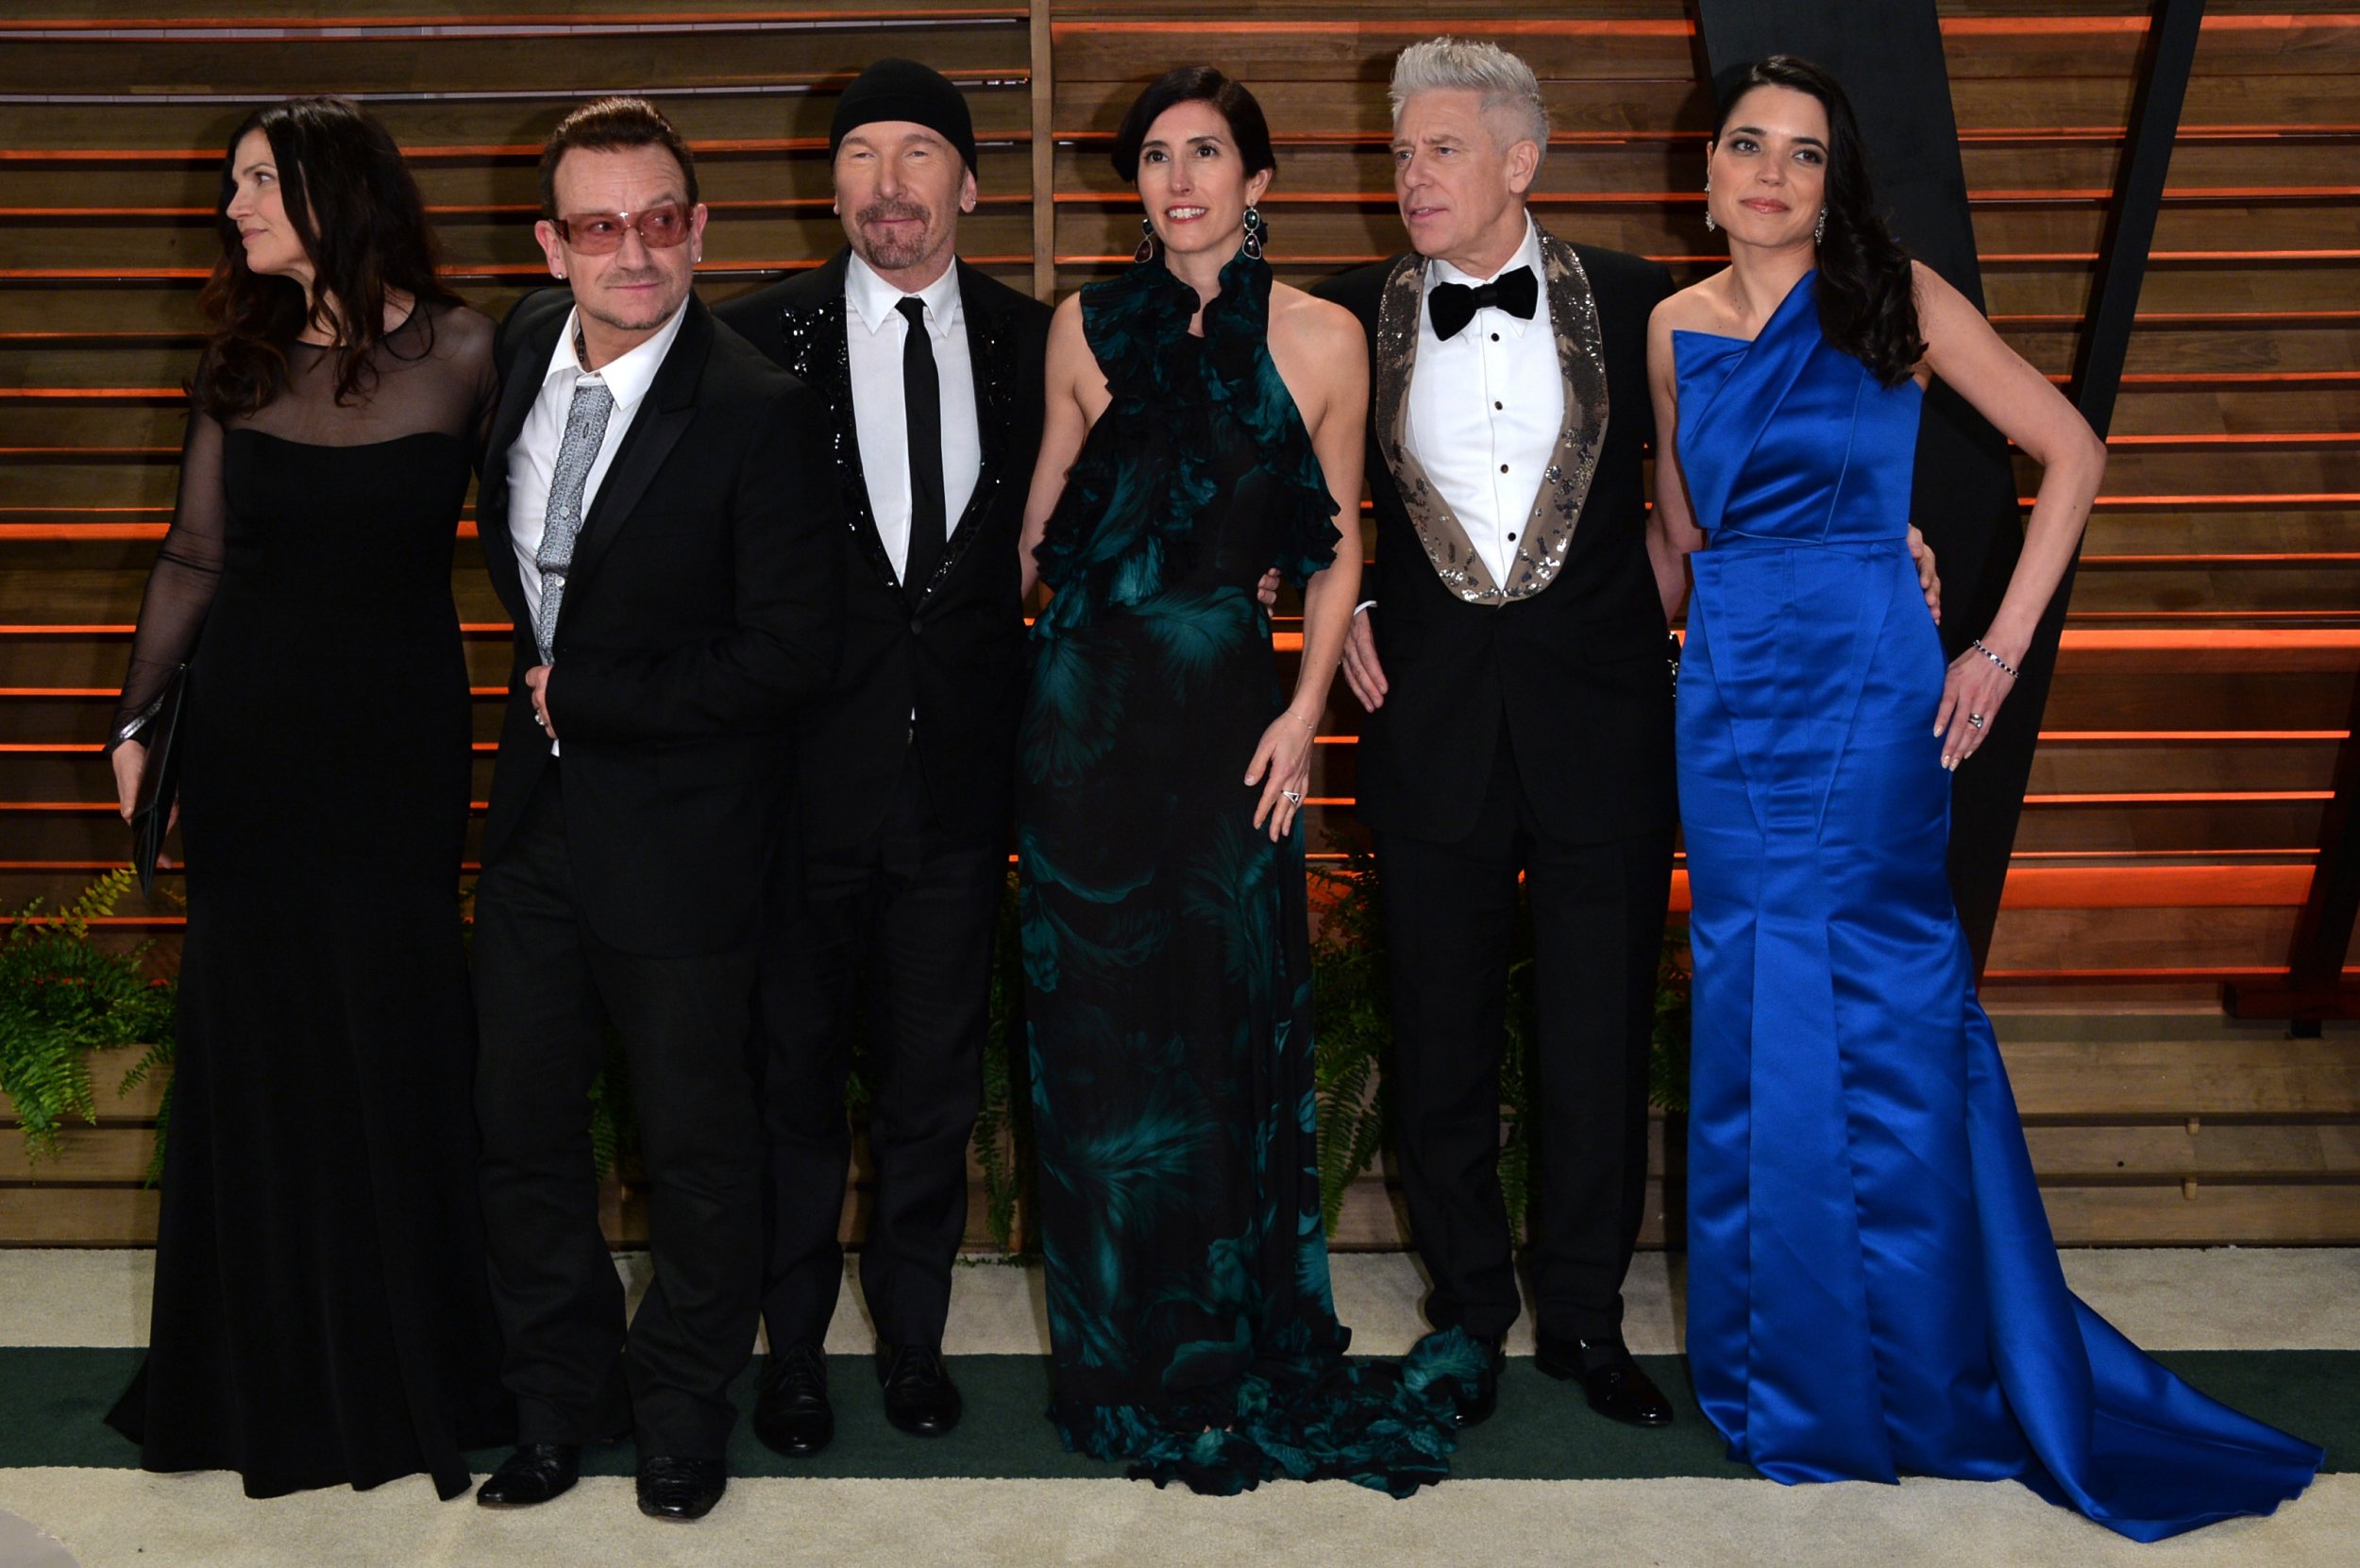 Ali Hewson, Bono, The Edge, Morleigh, Adam, and Mariana at the 2014 Vanity Fair post-Oscar party